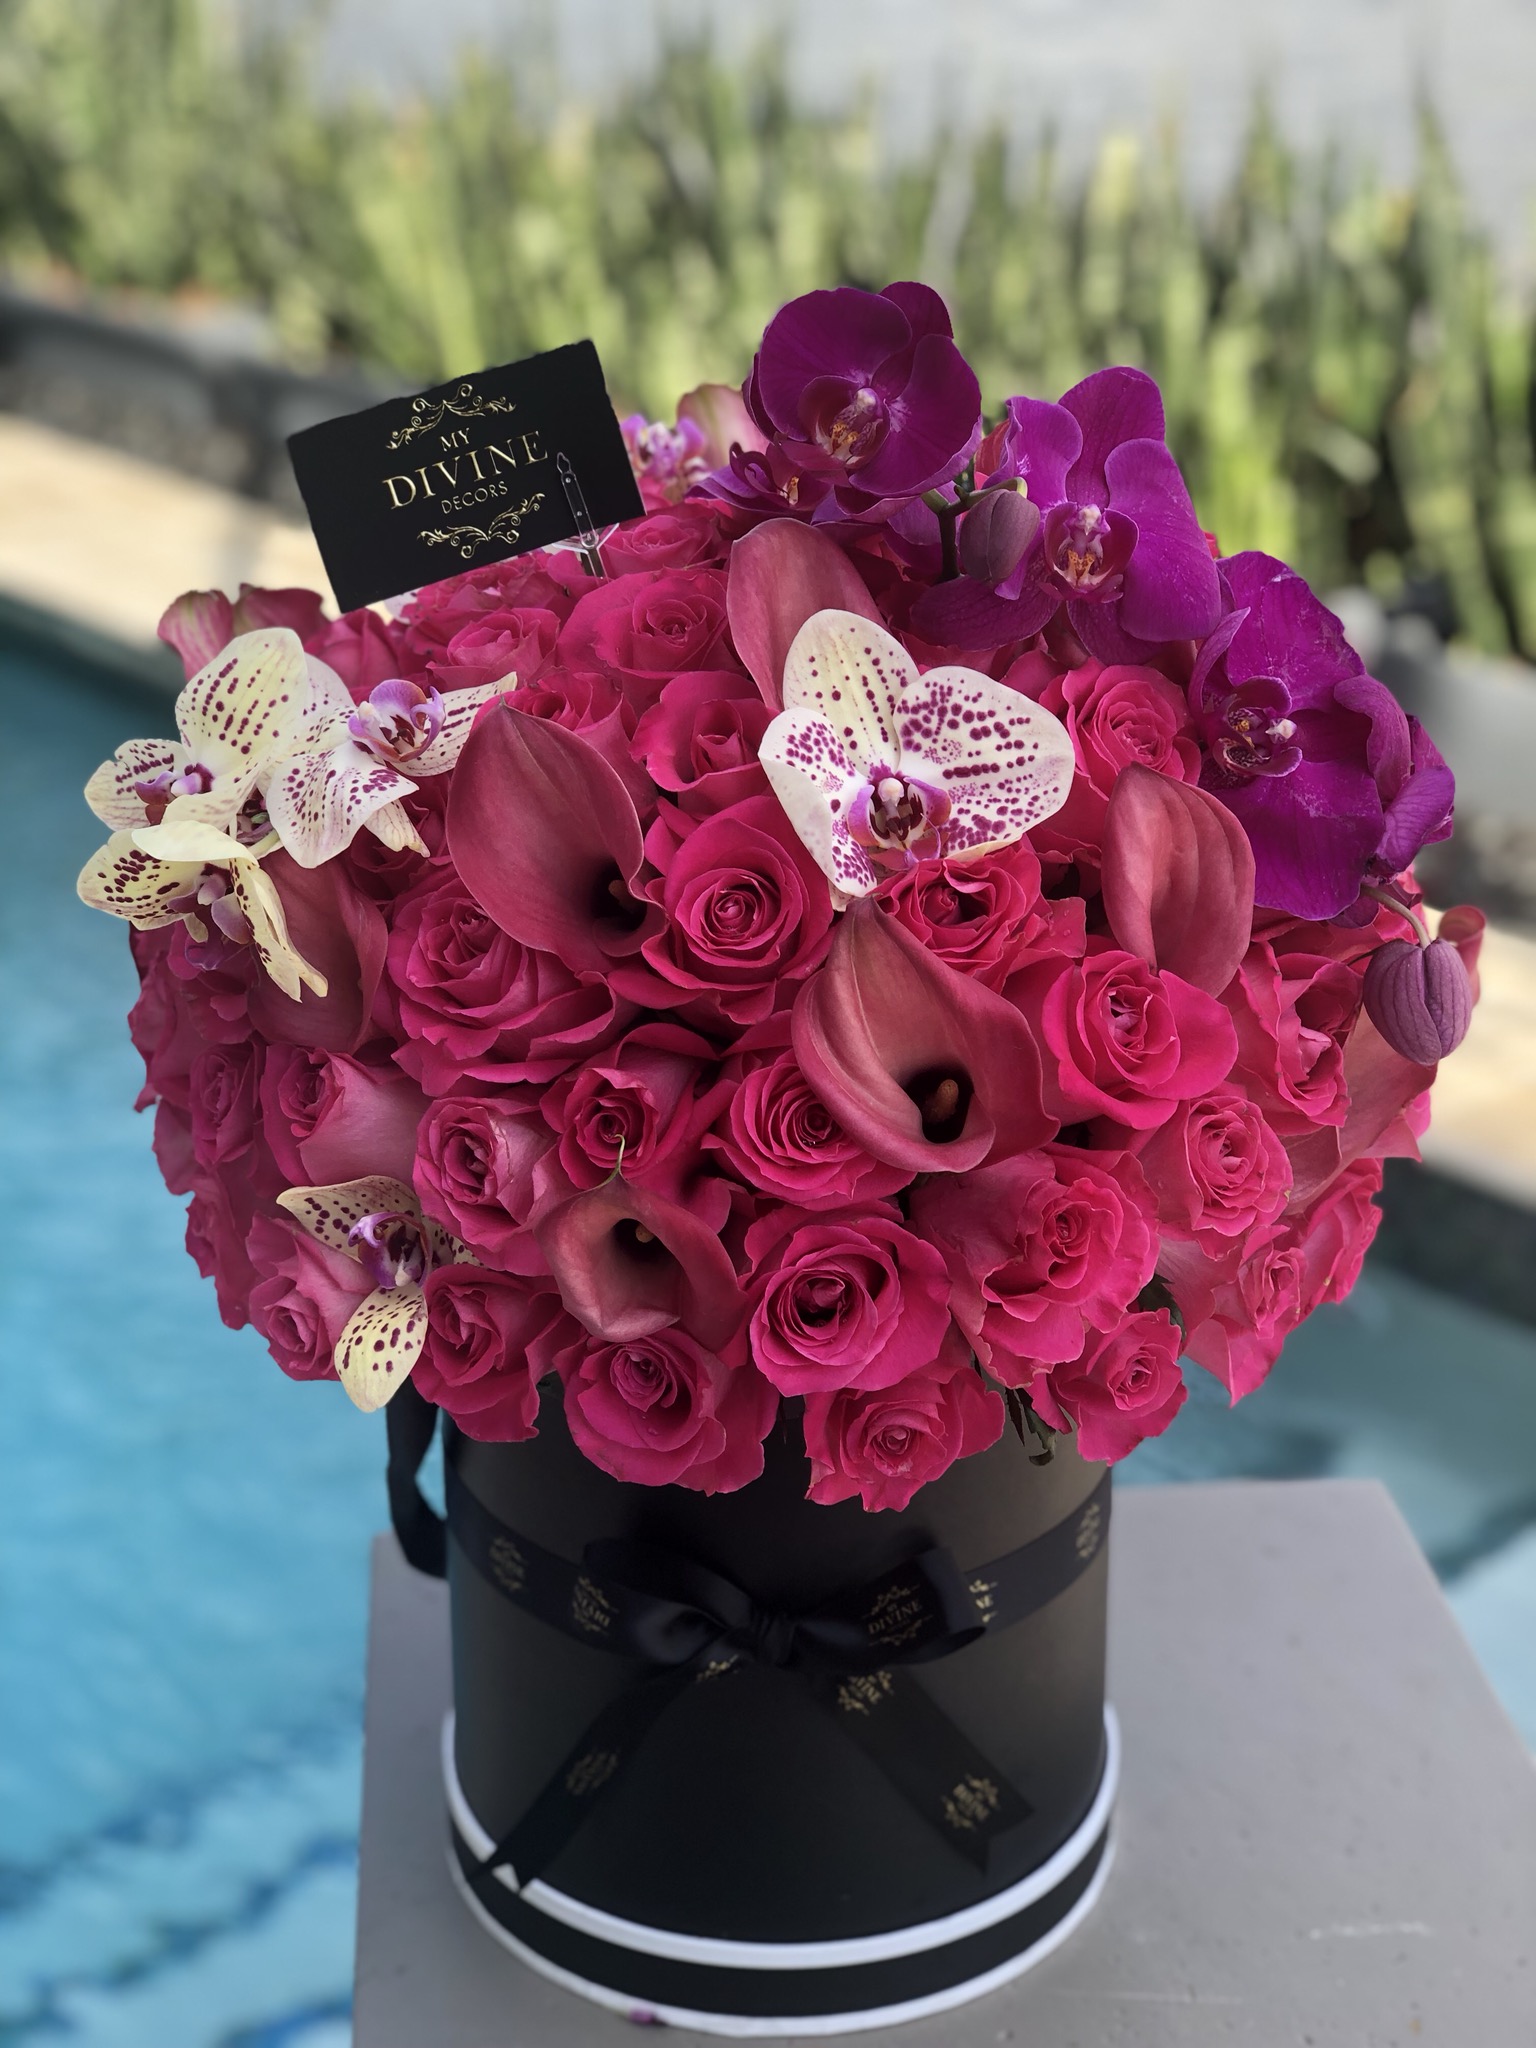 Luxury In Hot Pink - My Divine Decors Flower Boutique - Flower Arrangements